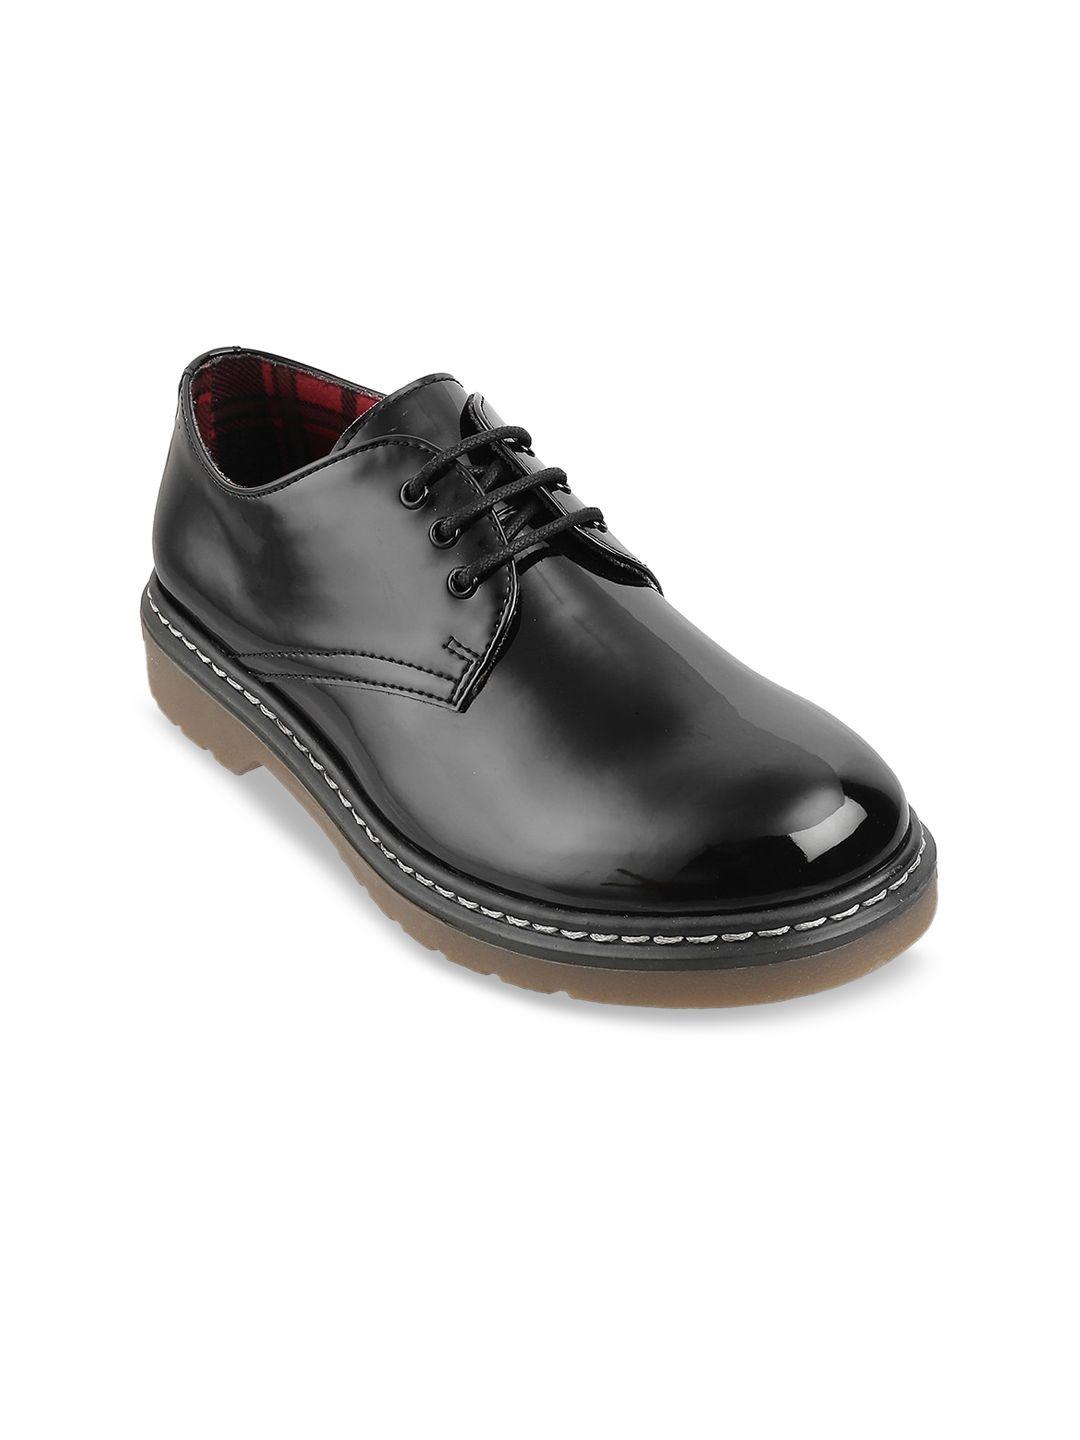 catwalk-black-block-heeled-boots